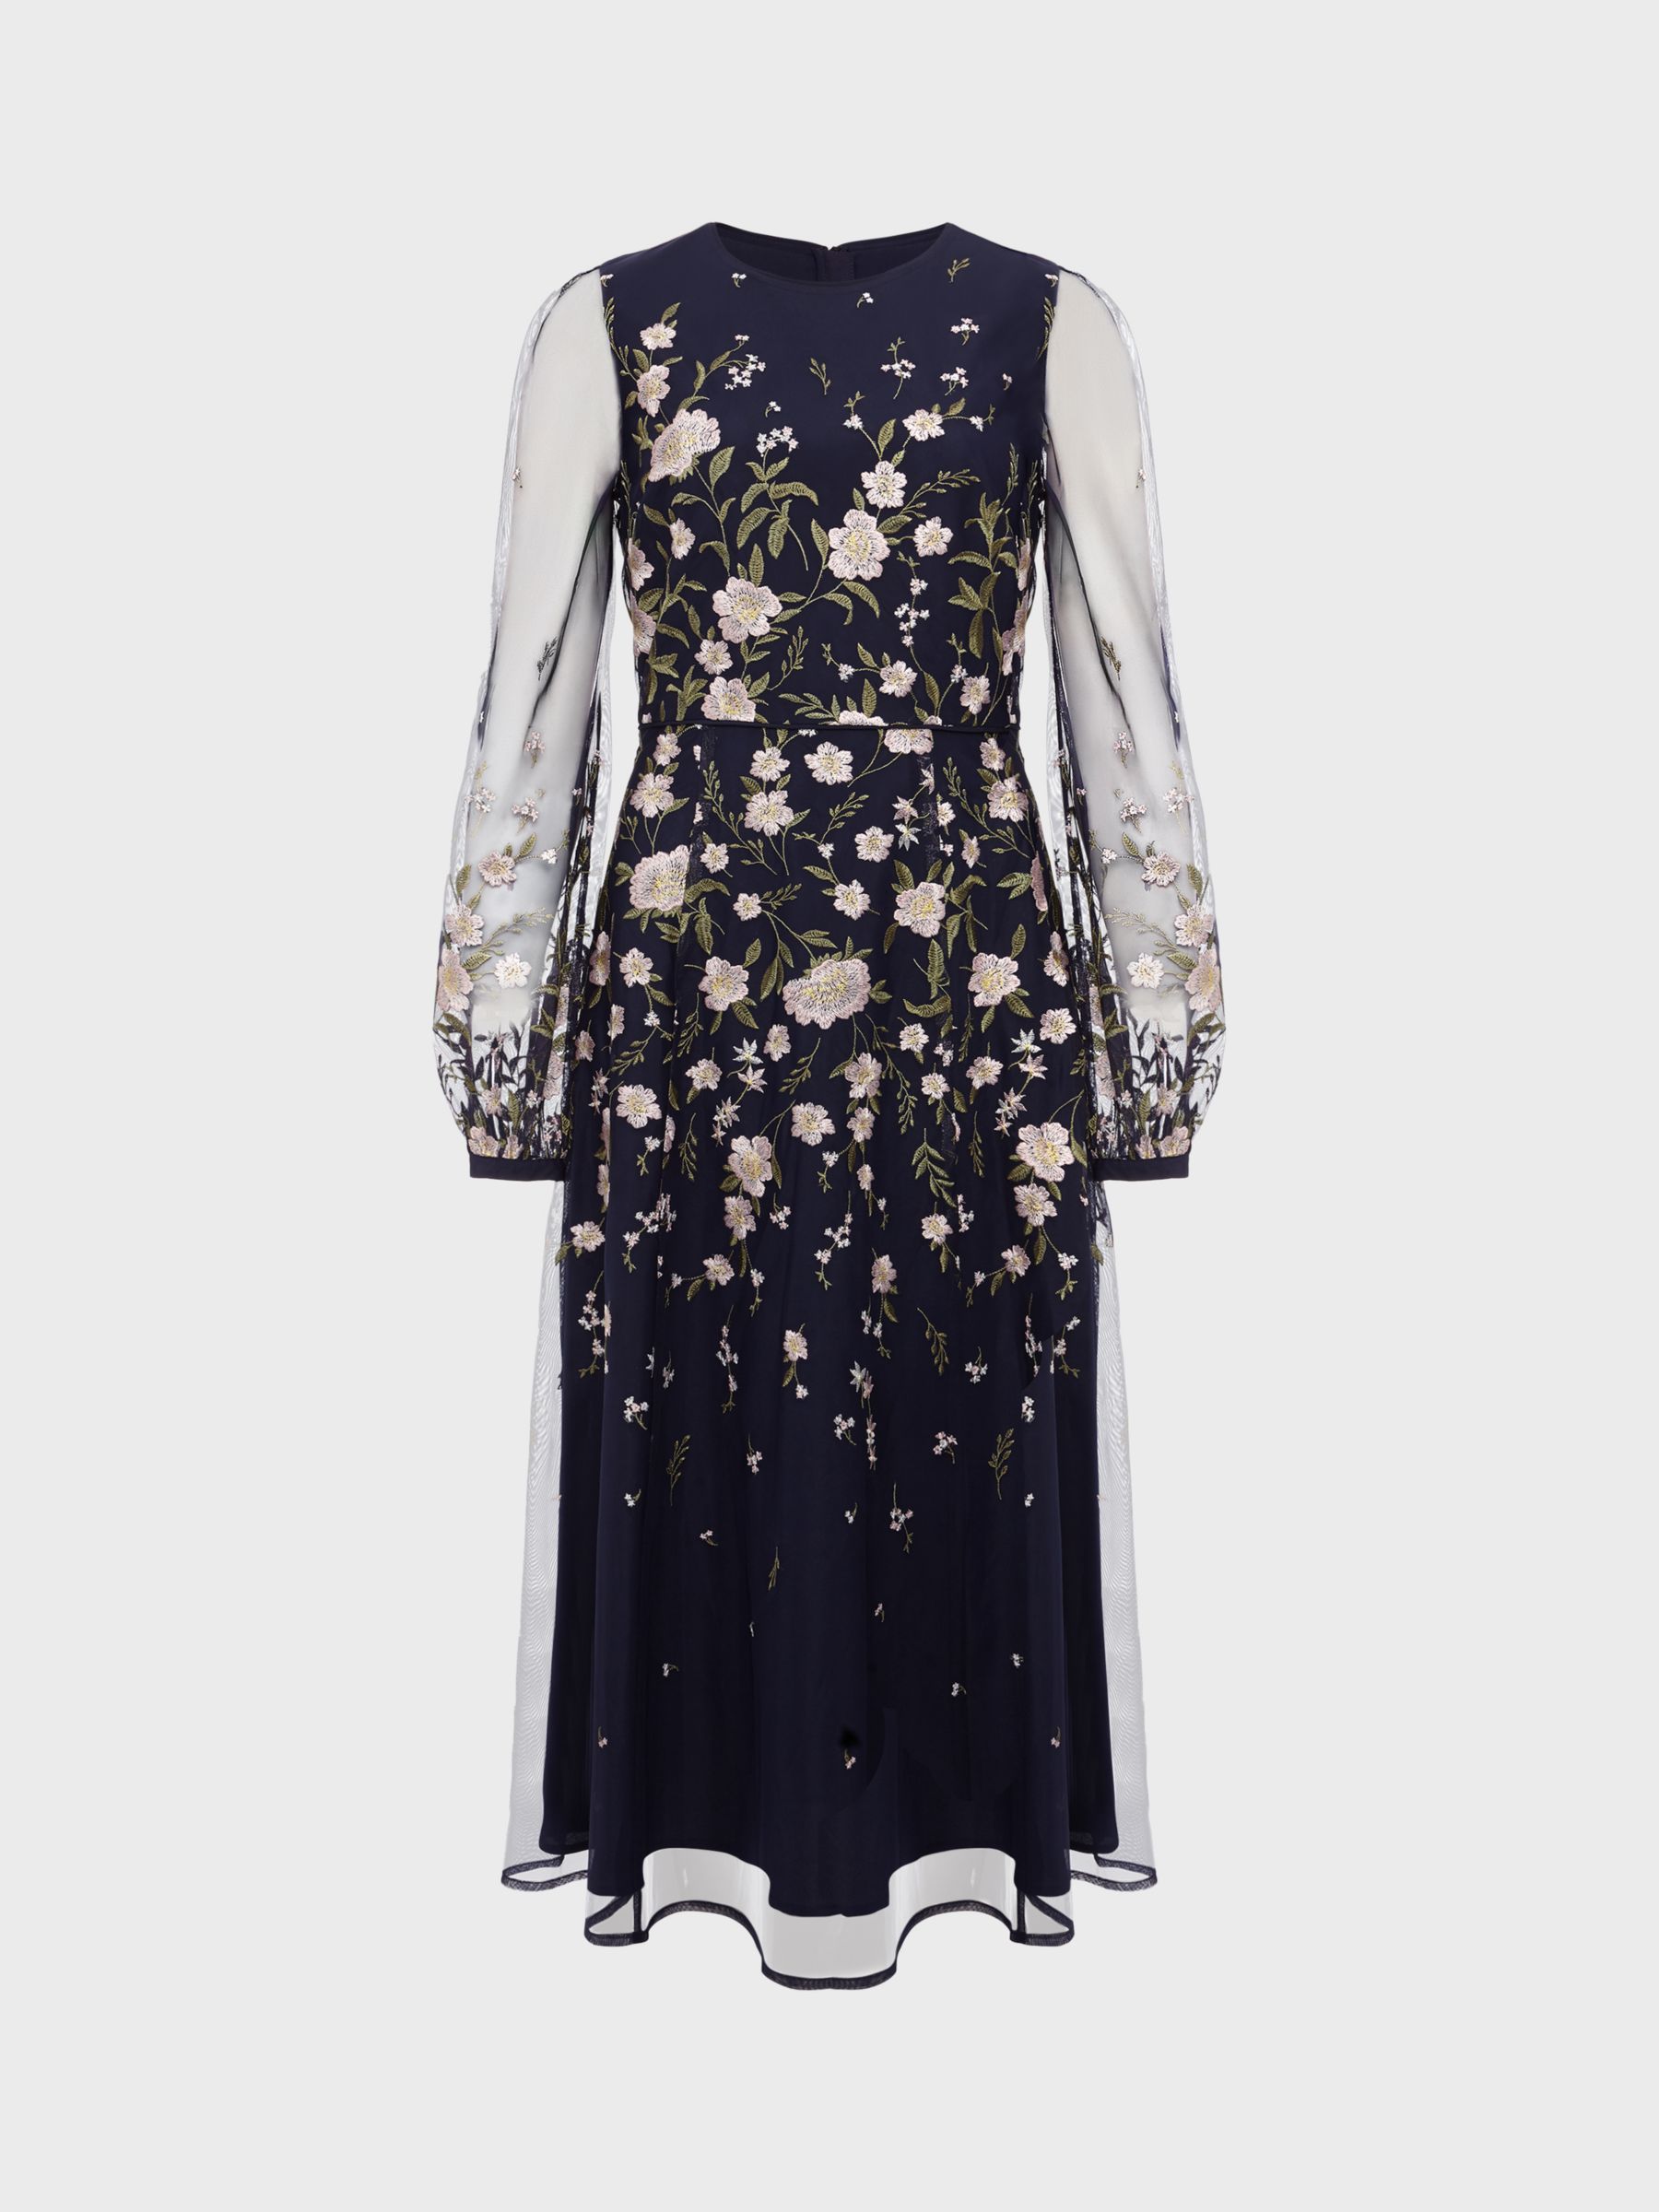 Hobbs Lois Floral Embroidered Midi Dress, Navy/Multi, 12